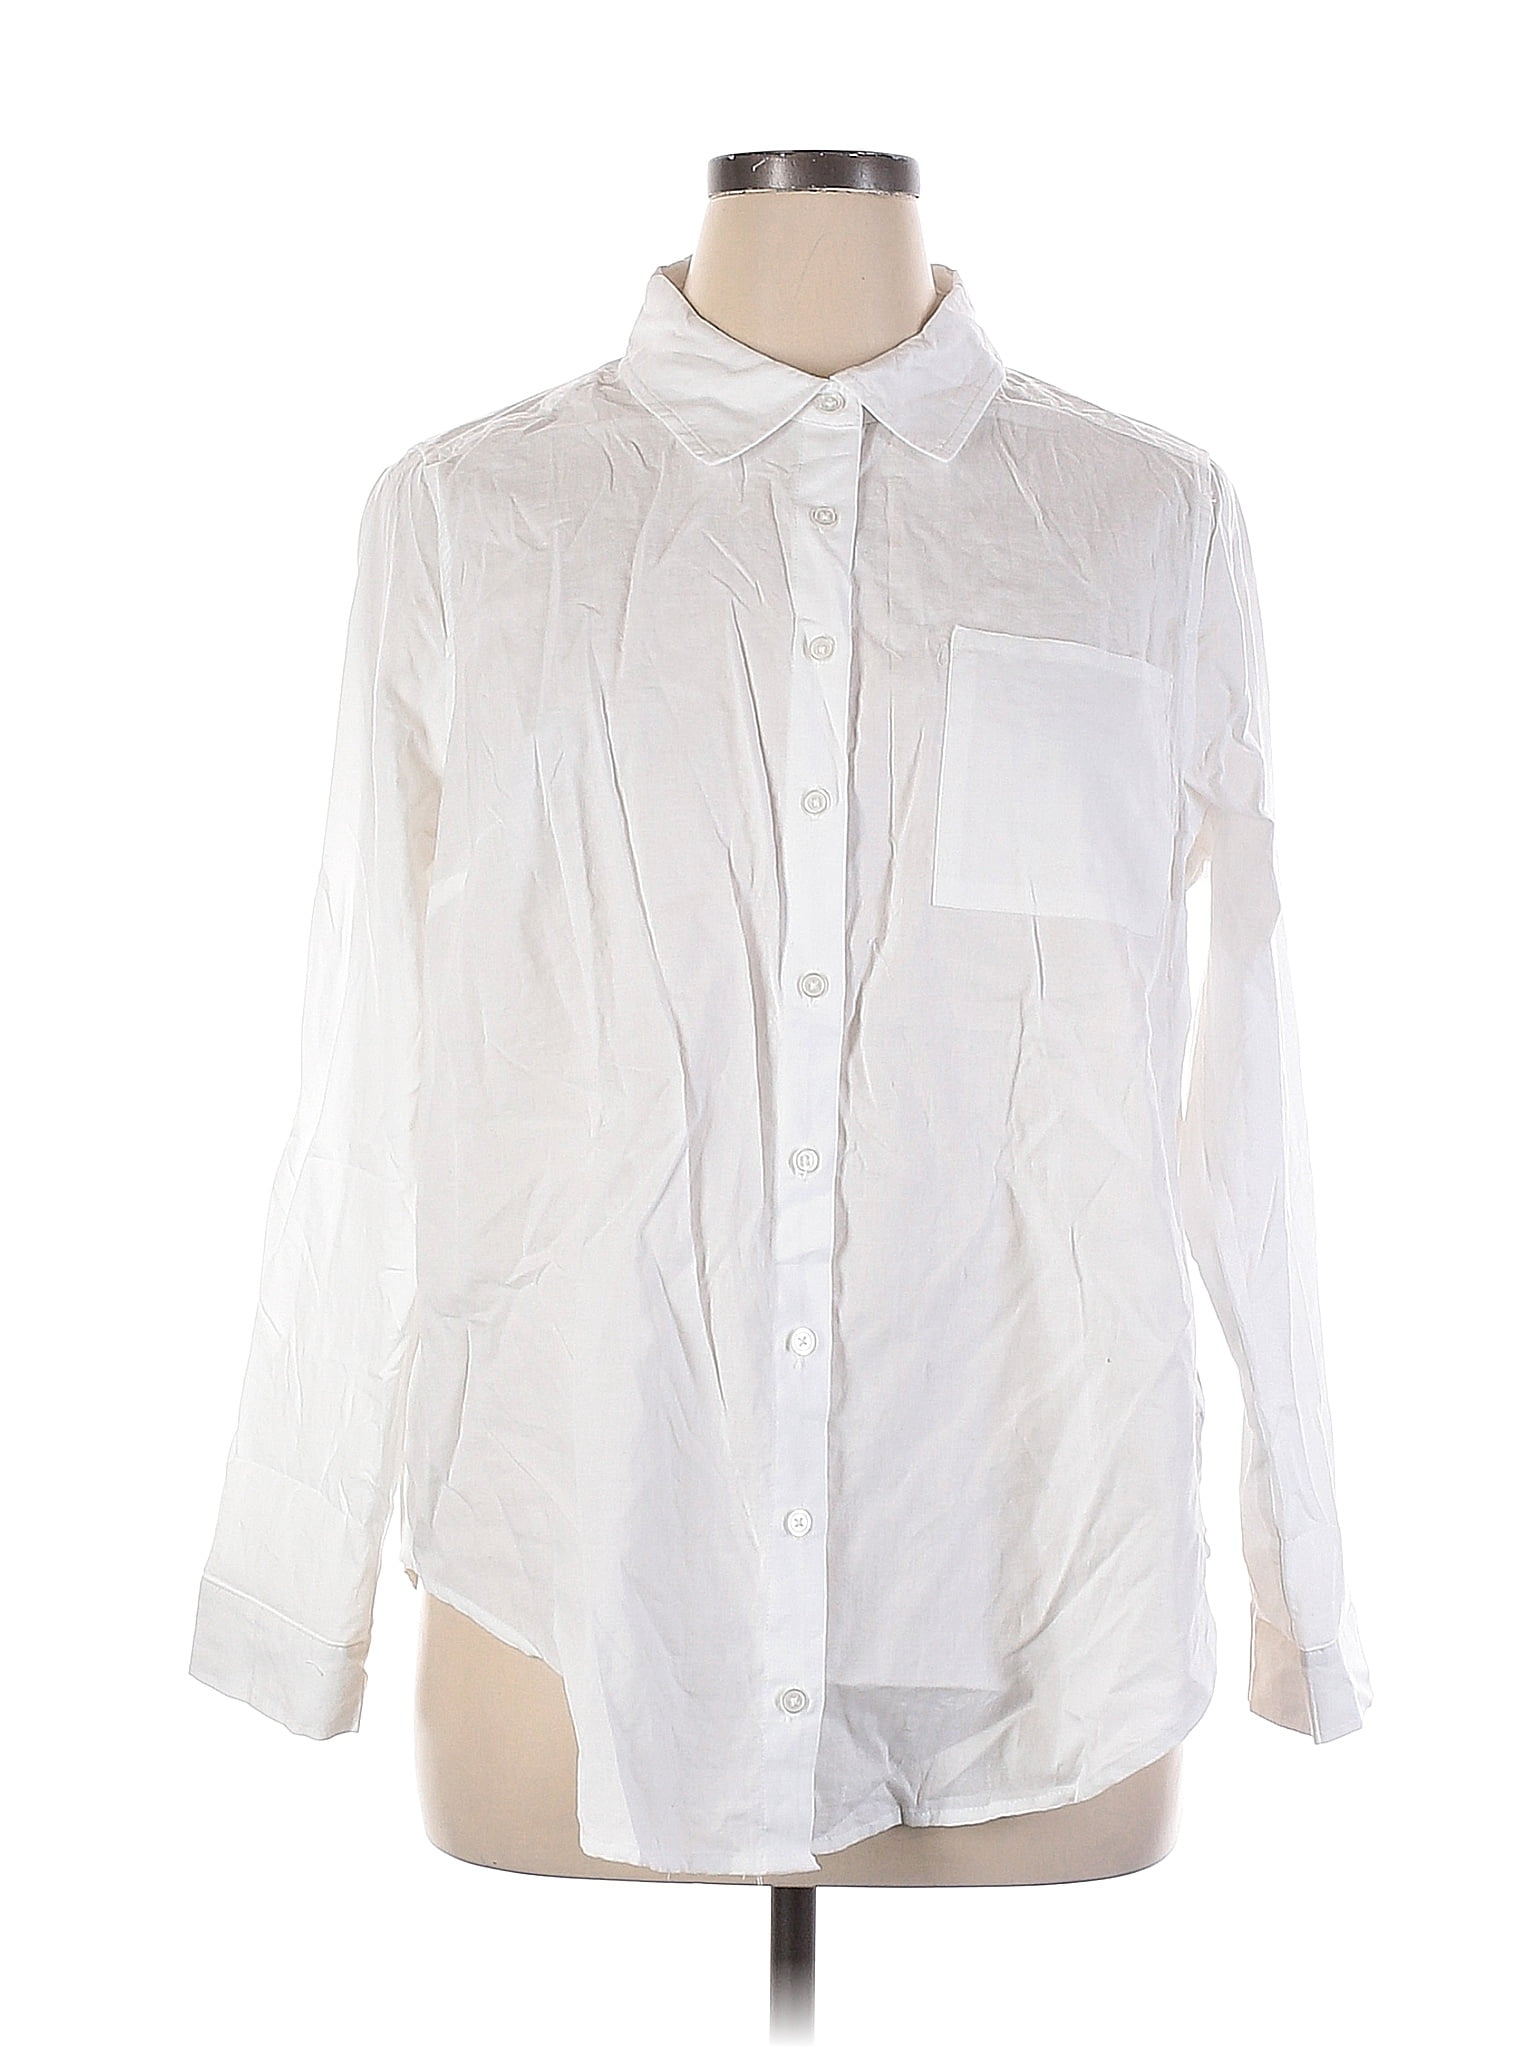 Torrid Solid White Long Sleeve Button-Down Shirt Size 1X Plus (1) (Plus ...